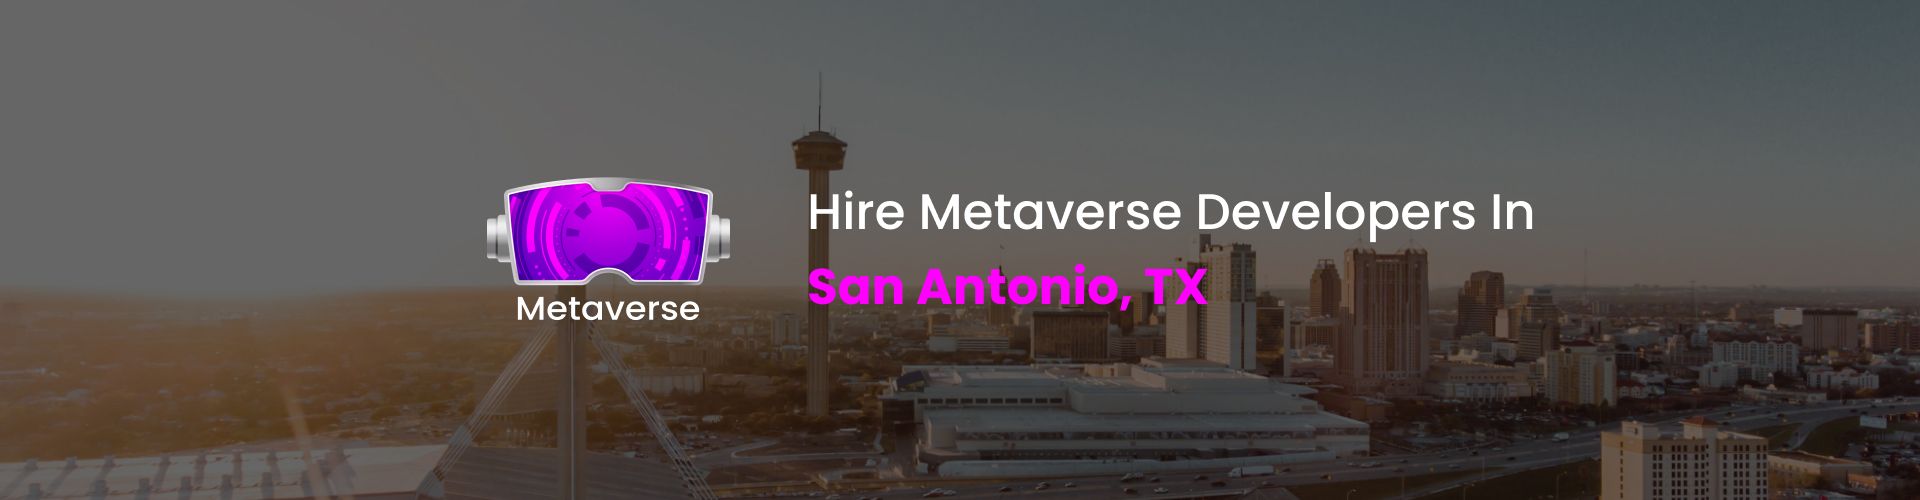 hire metaverse developers in san antonio